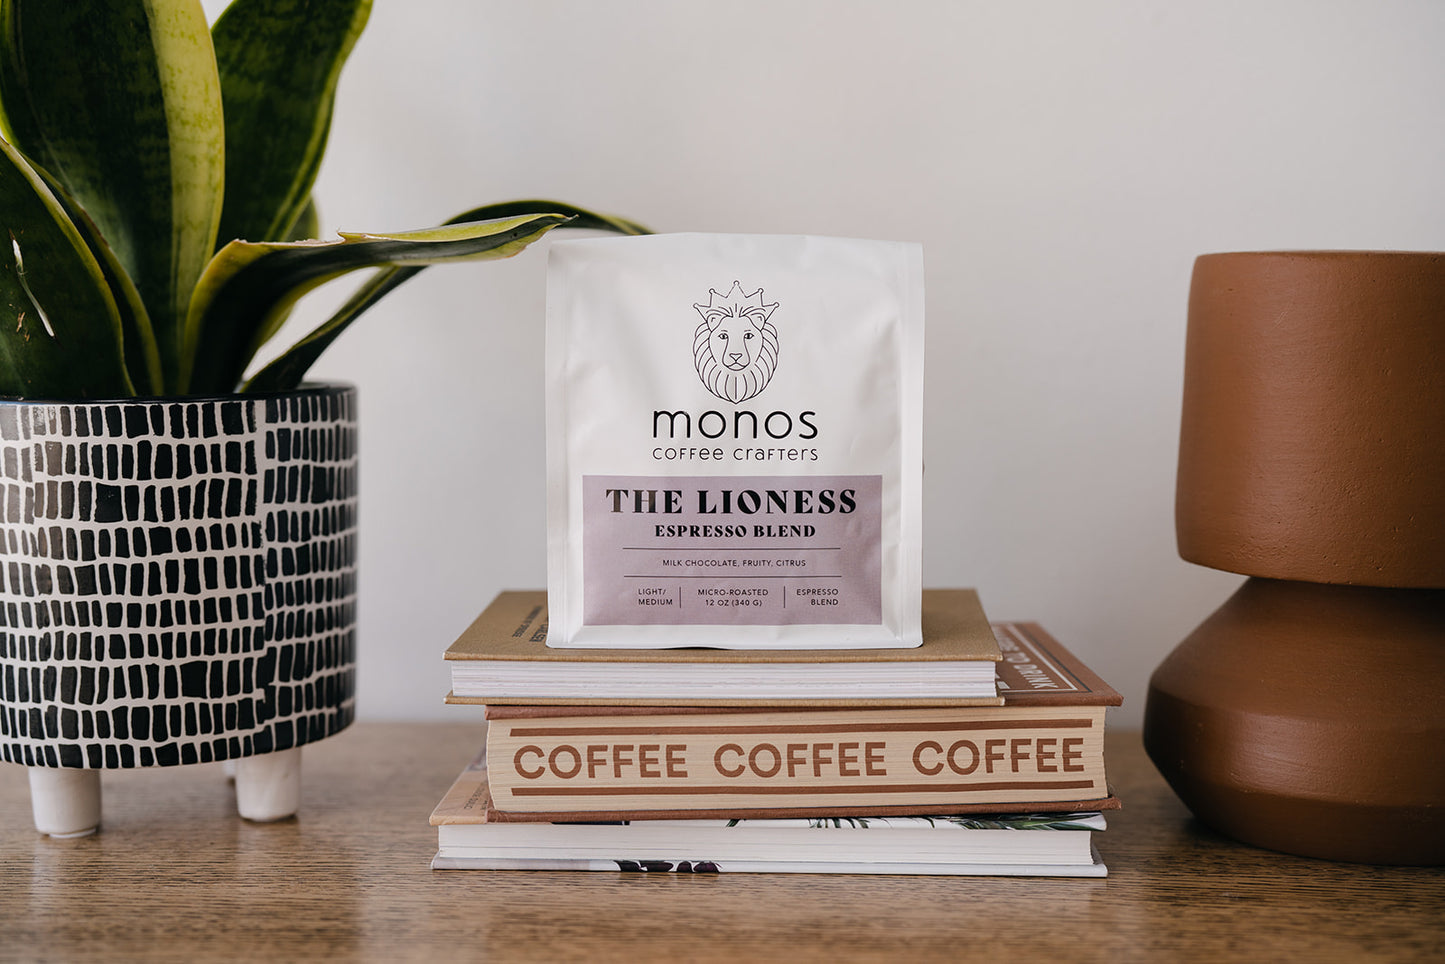 The Lioness - Espresso Blend